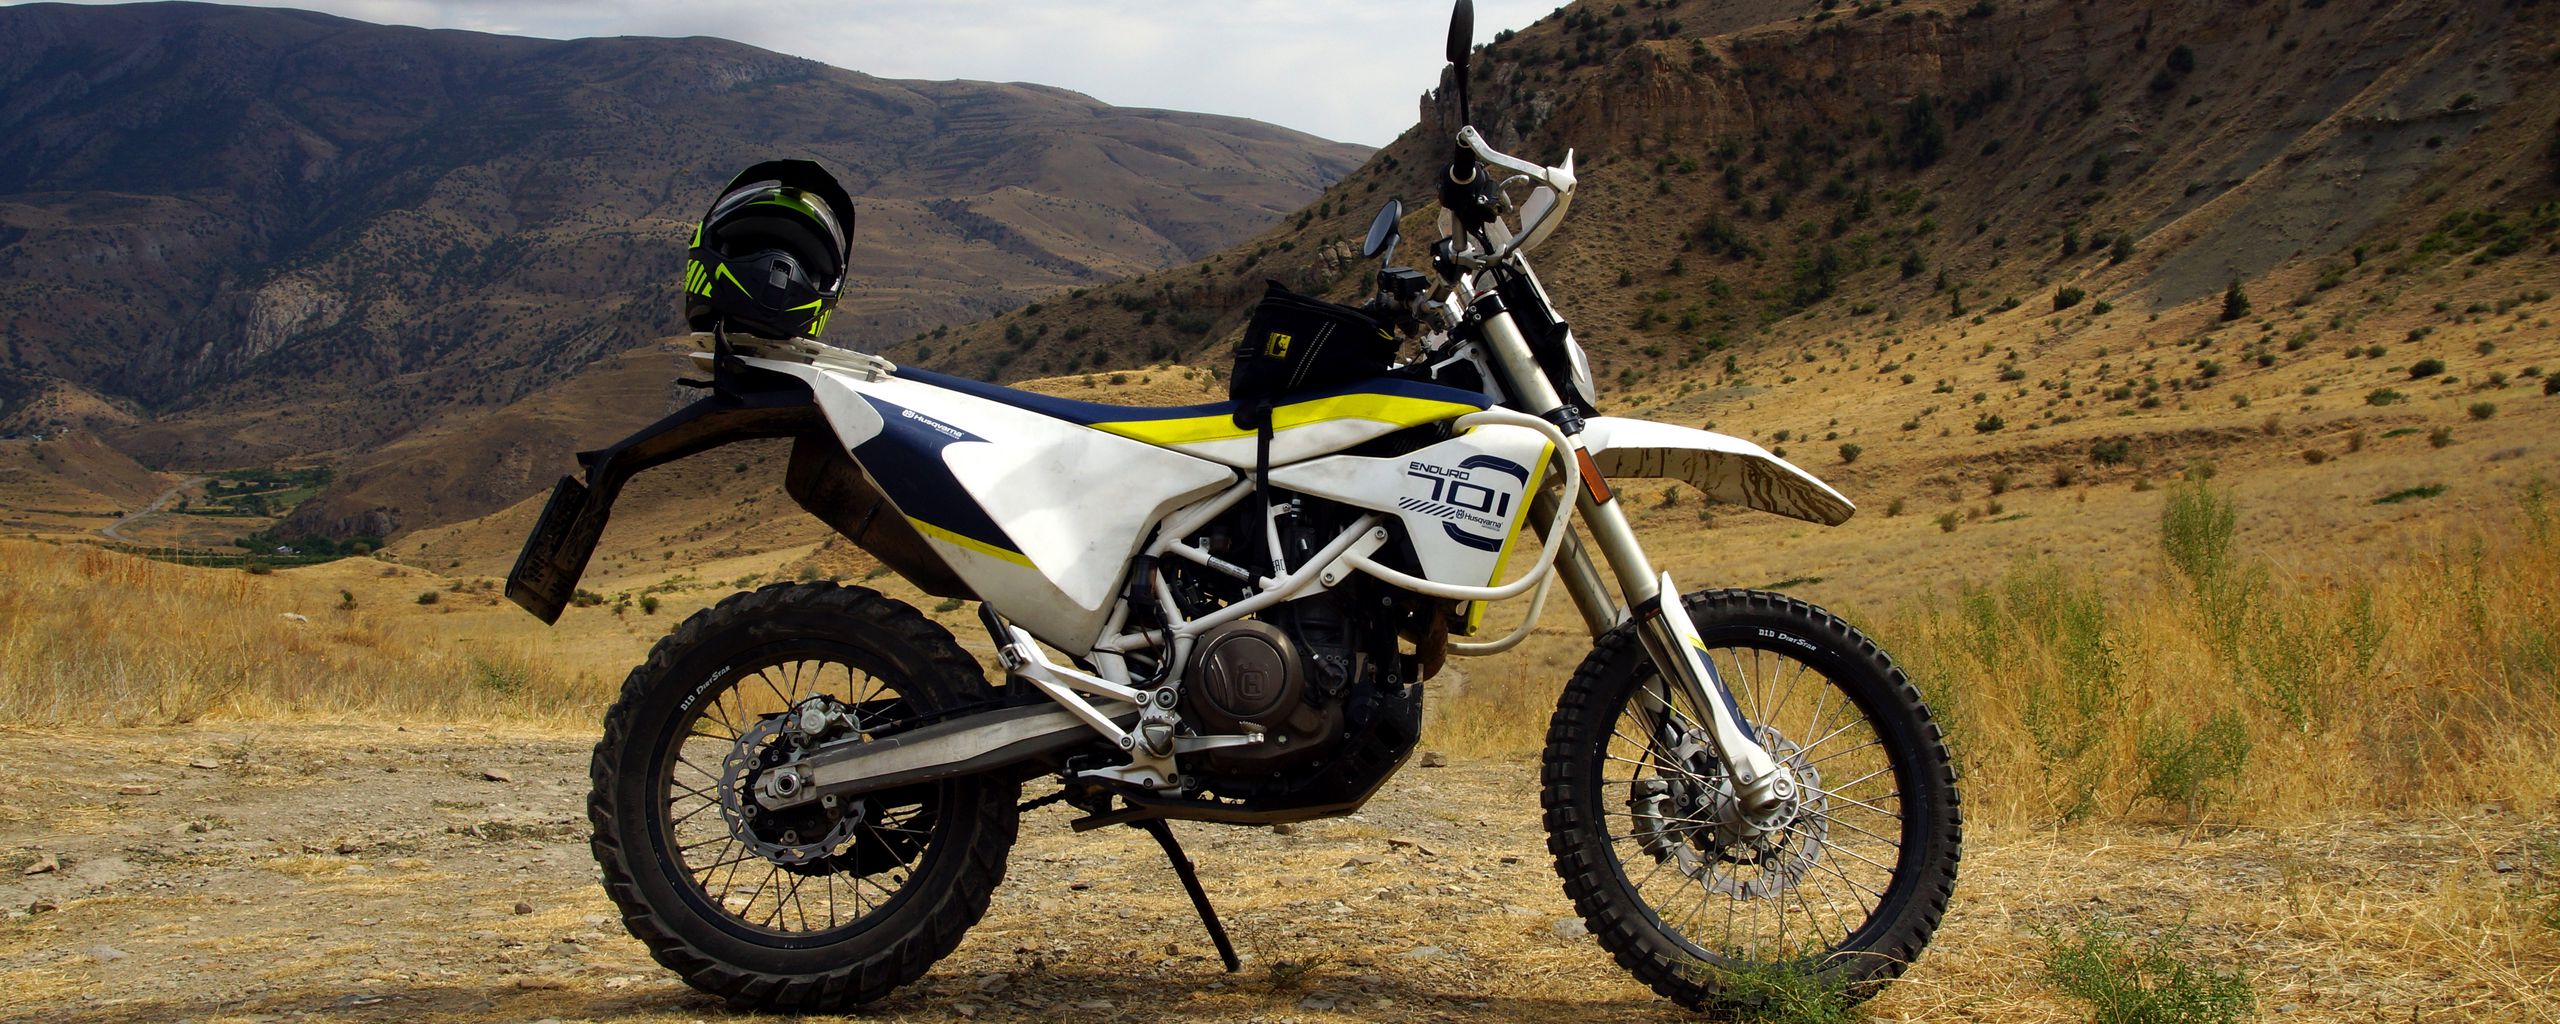 2560x1024 Wallpaper motorcycle, bike, mountains, nature